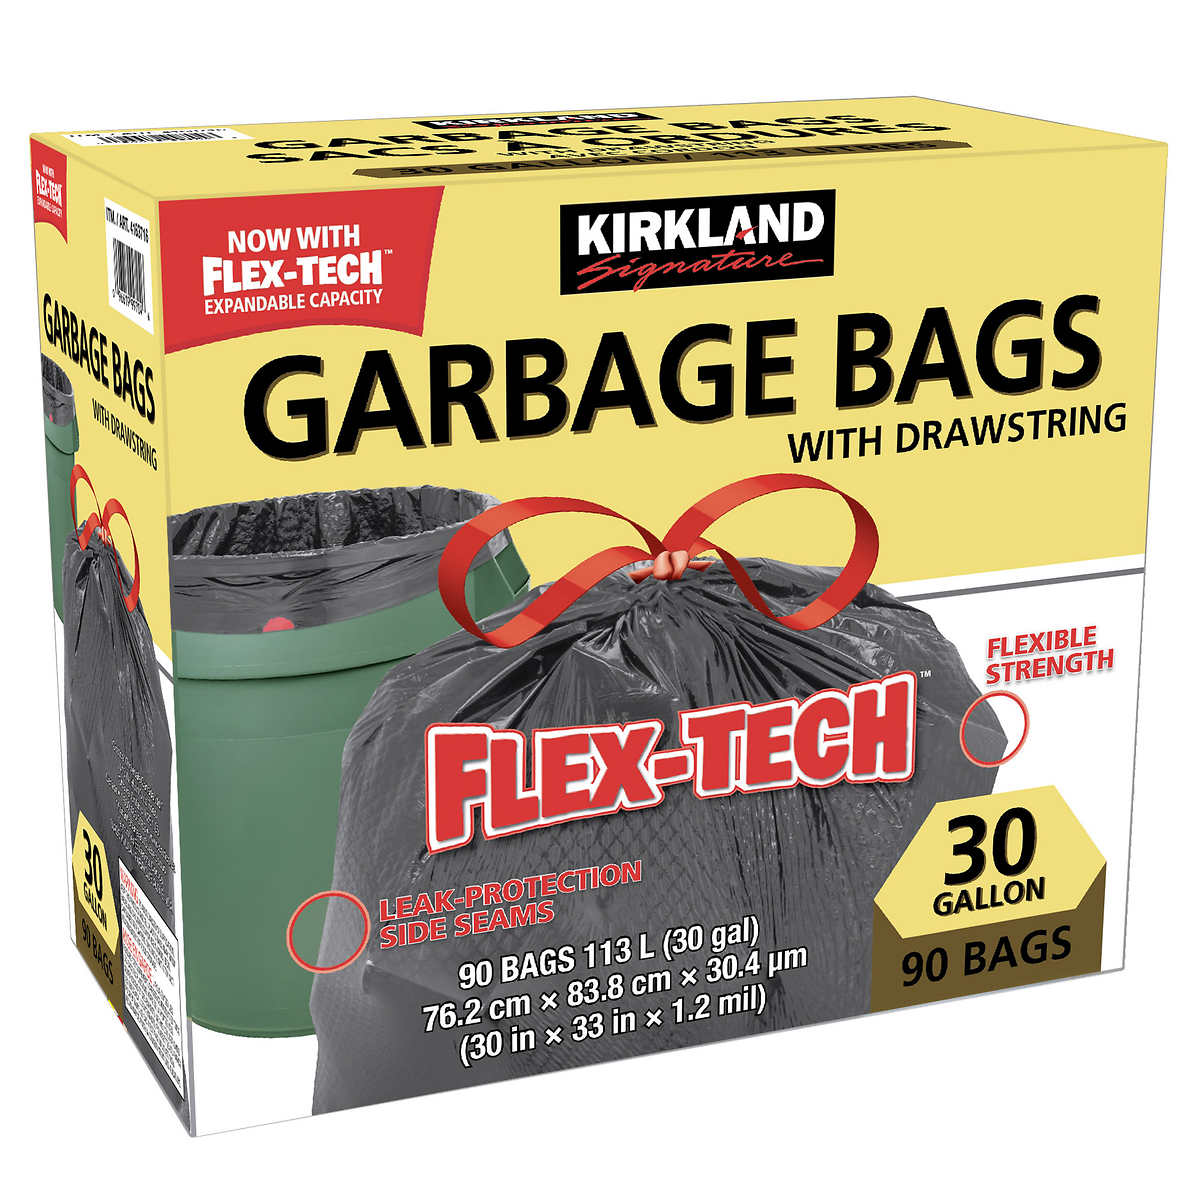 Kirkland Signature Drawstring Trash Bags - 33 Gallon - Xl Size - (90 count)